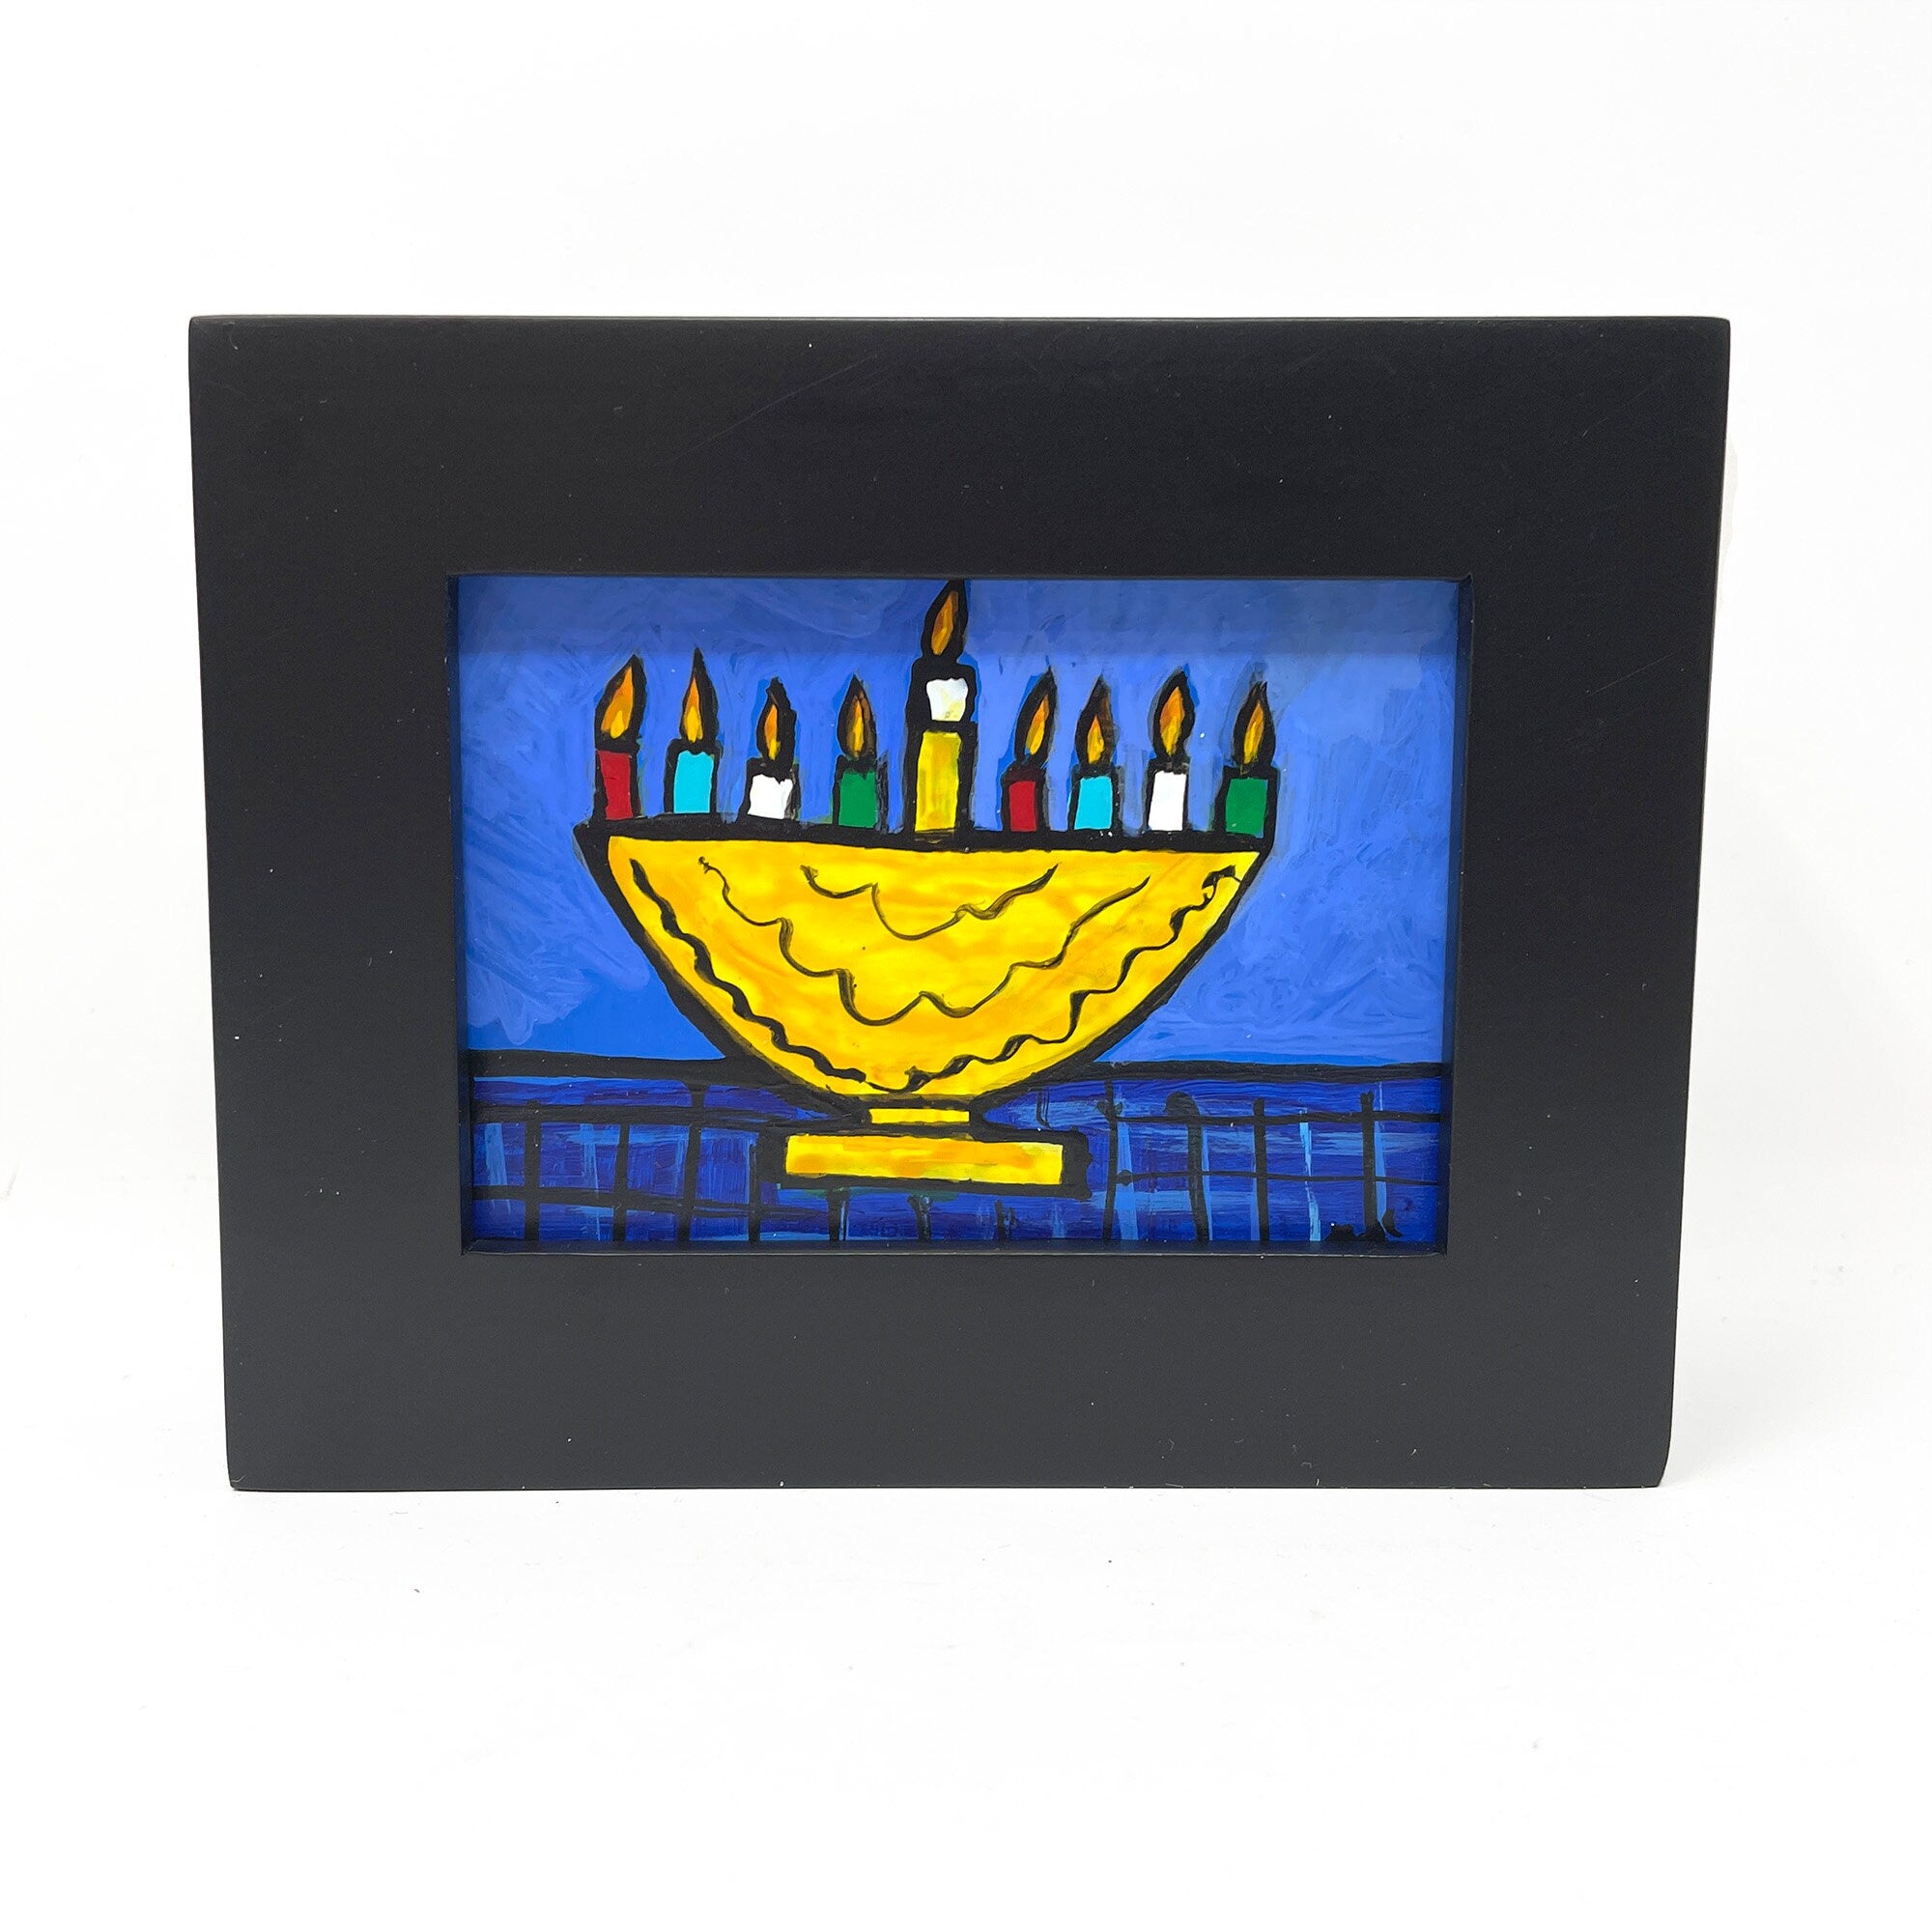 Framed Mini Menorah Painting for Hanukkah - Holiday Decor, Chanukah Gift, Jewish Decor, Judaica